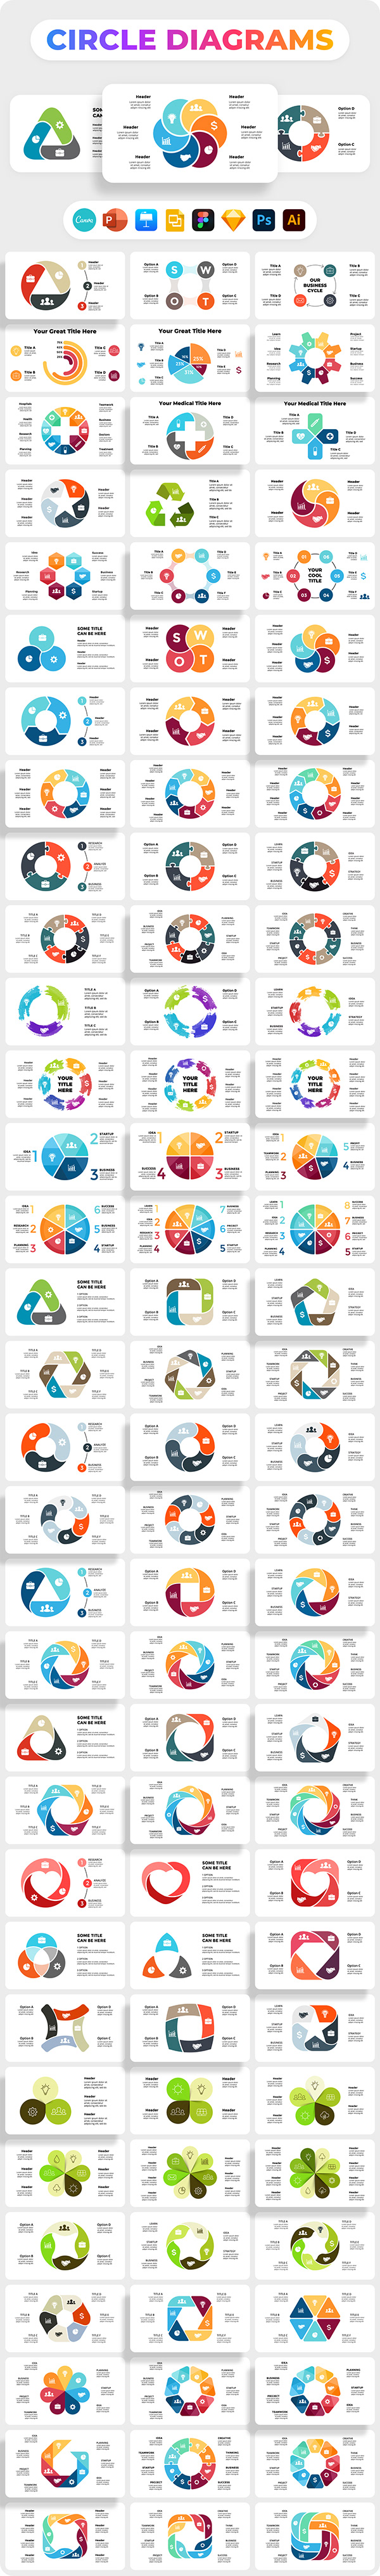 Free Marketing Ppt Slides! Business Startup Infographic